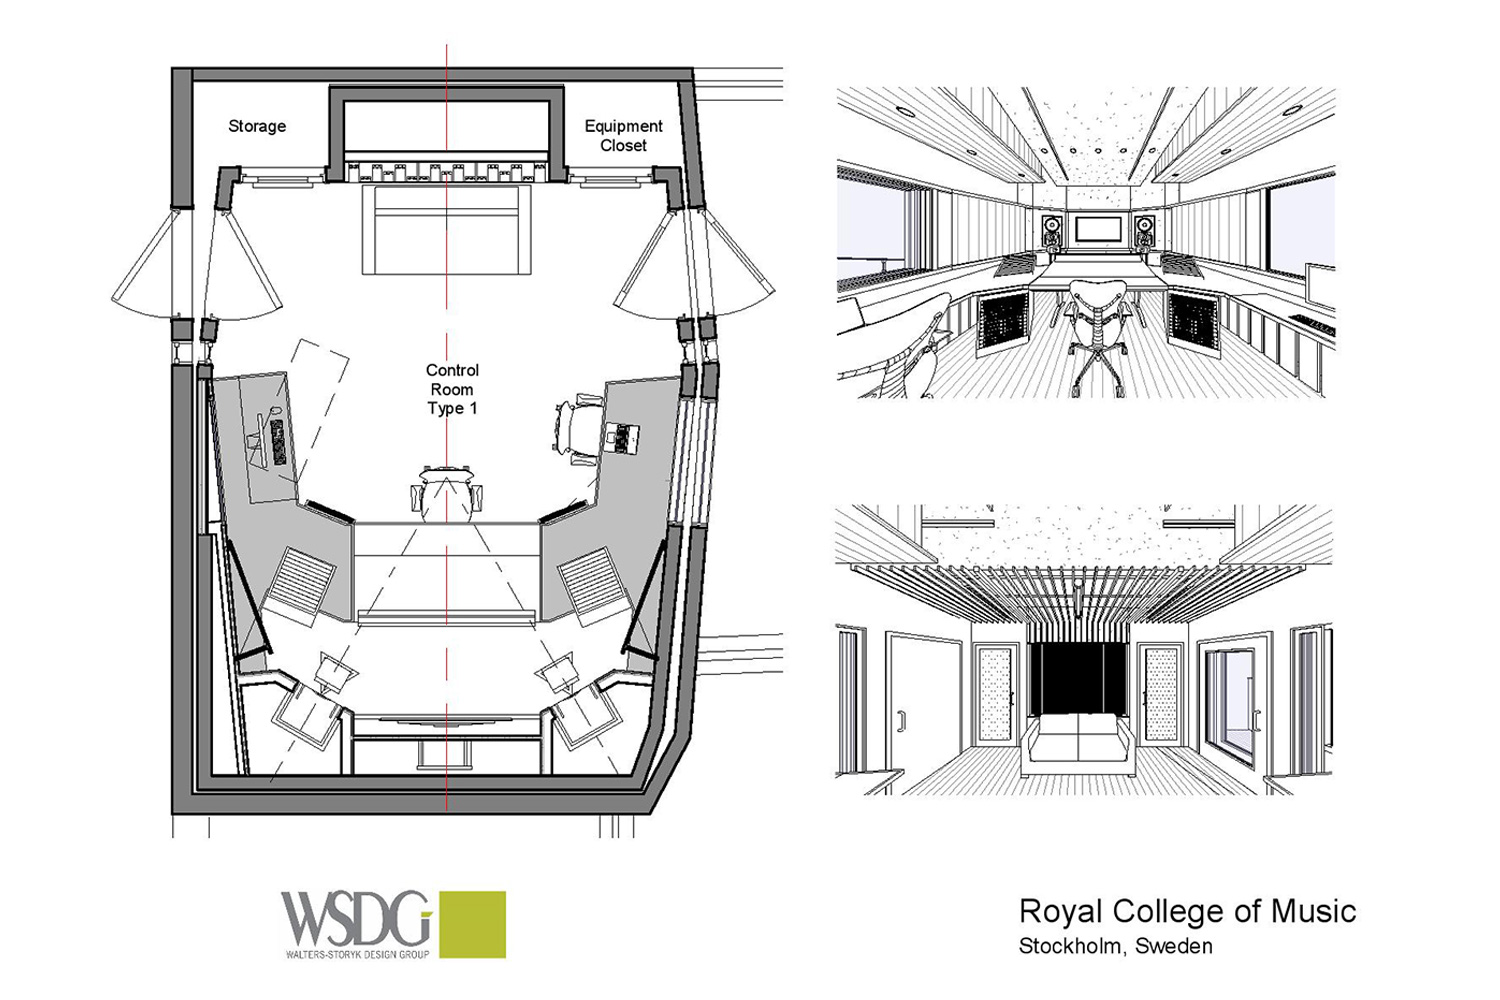 The Stockholm Royal College of Music. WSDG design presentation drawings 2.